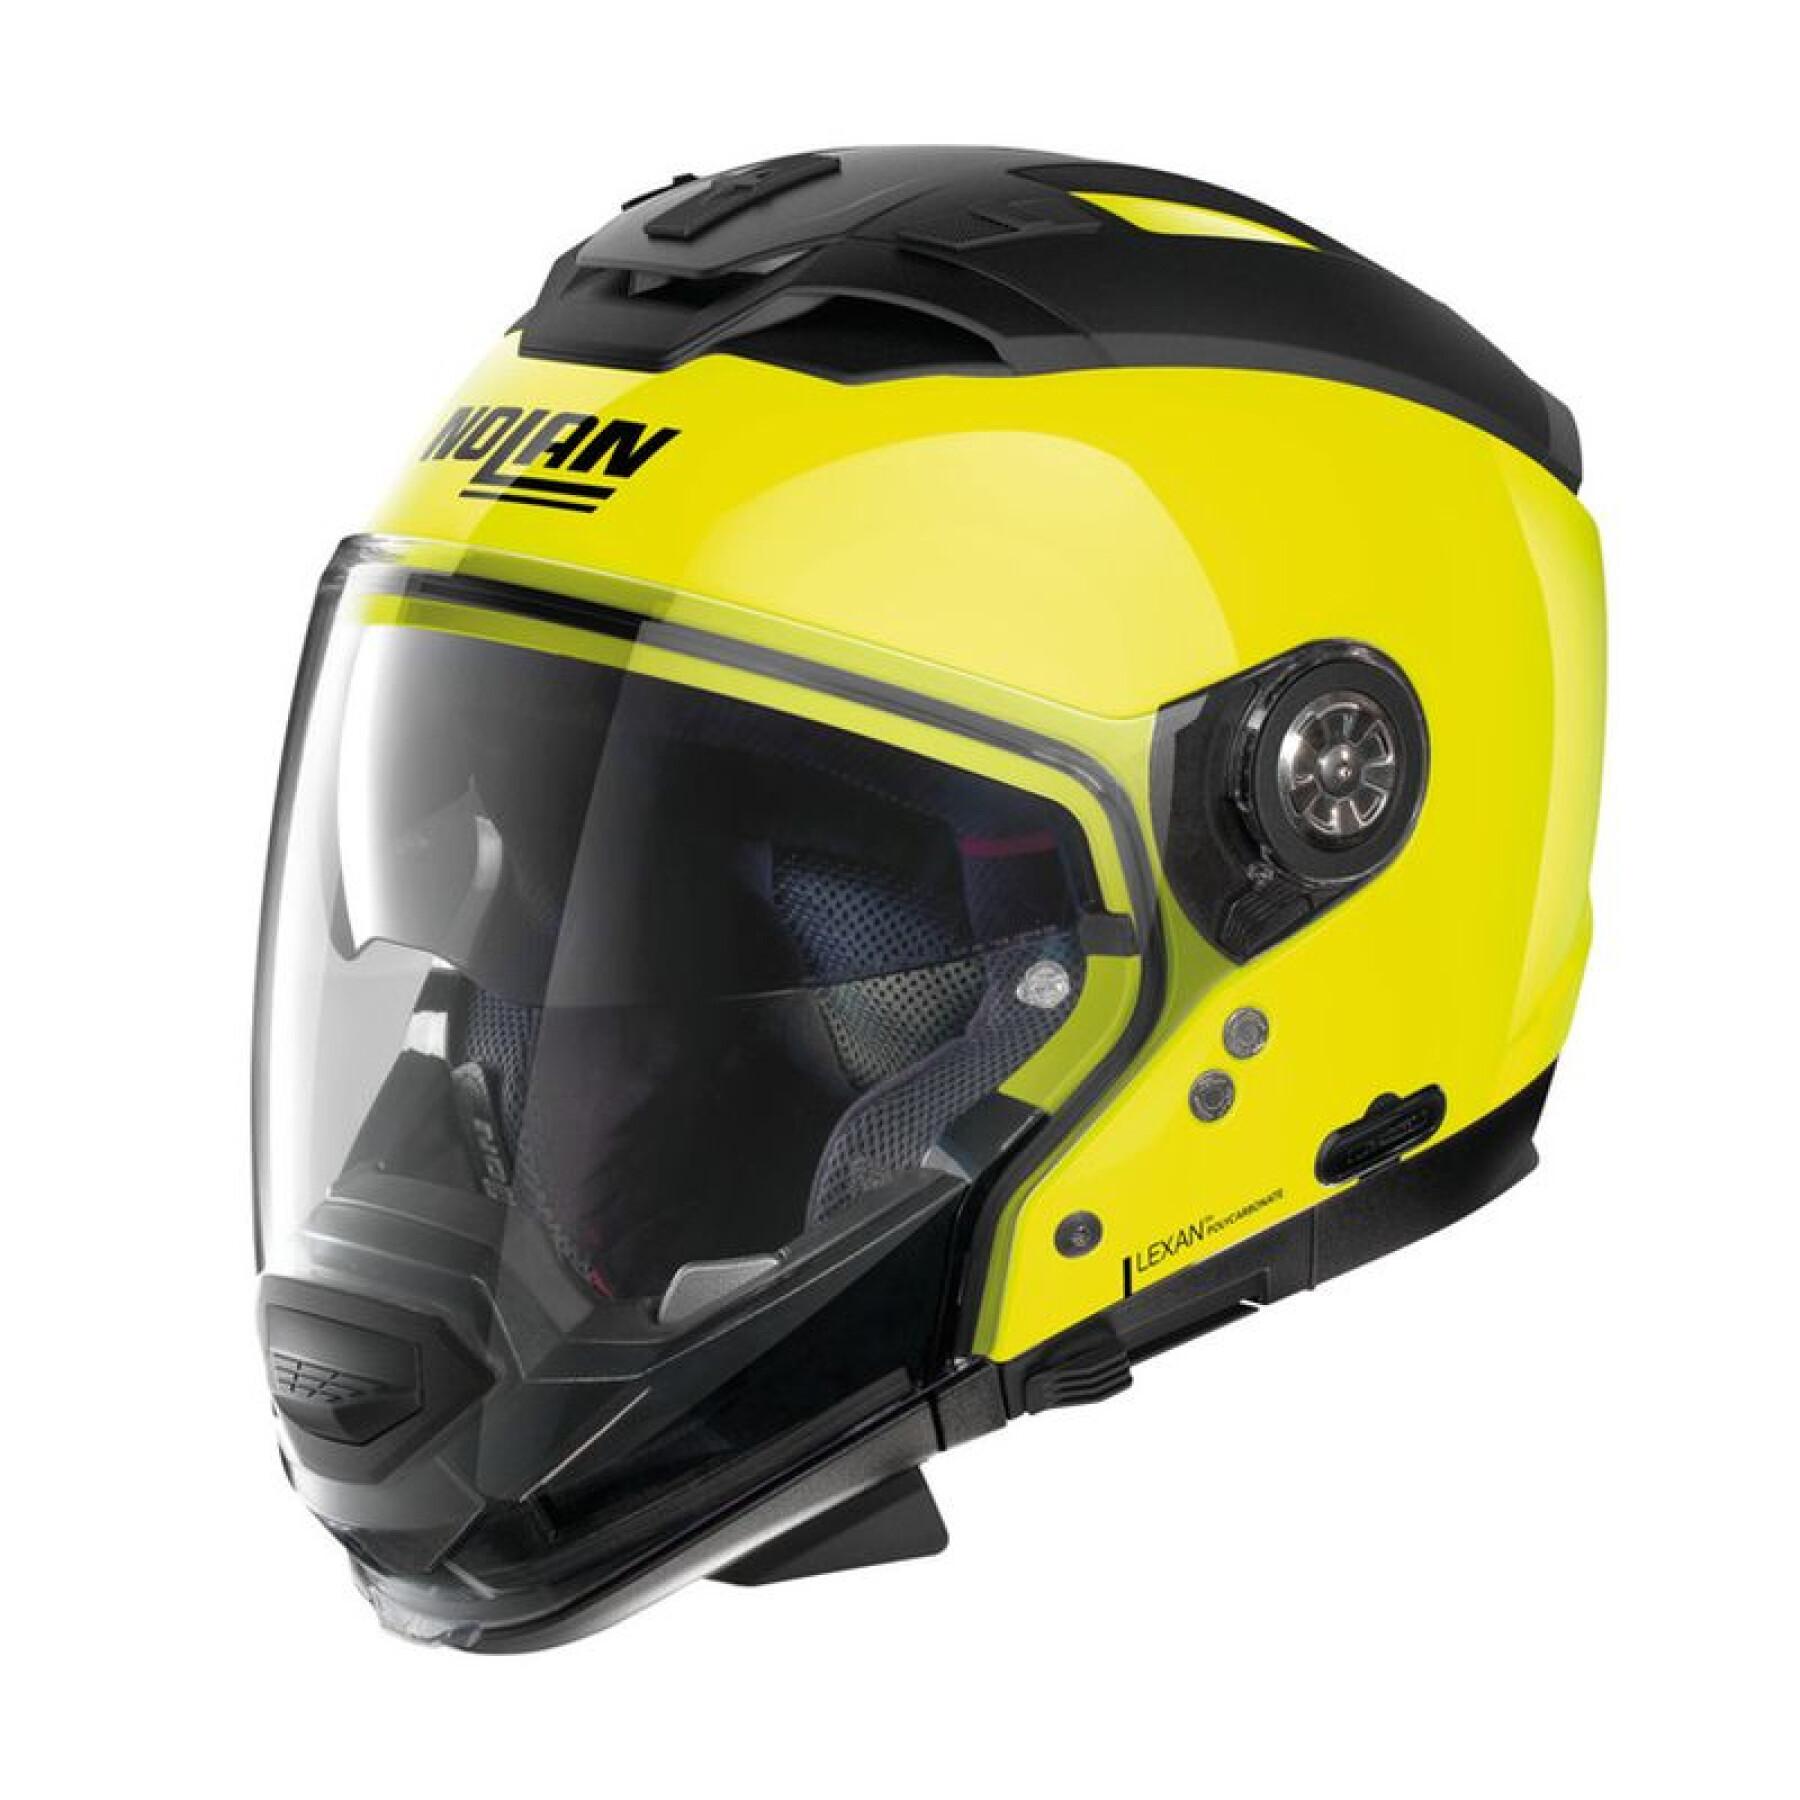 Motorfiets crossover helm n70-2 gt Nolan Hi-Visibility N-Com Fluo 22